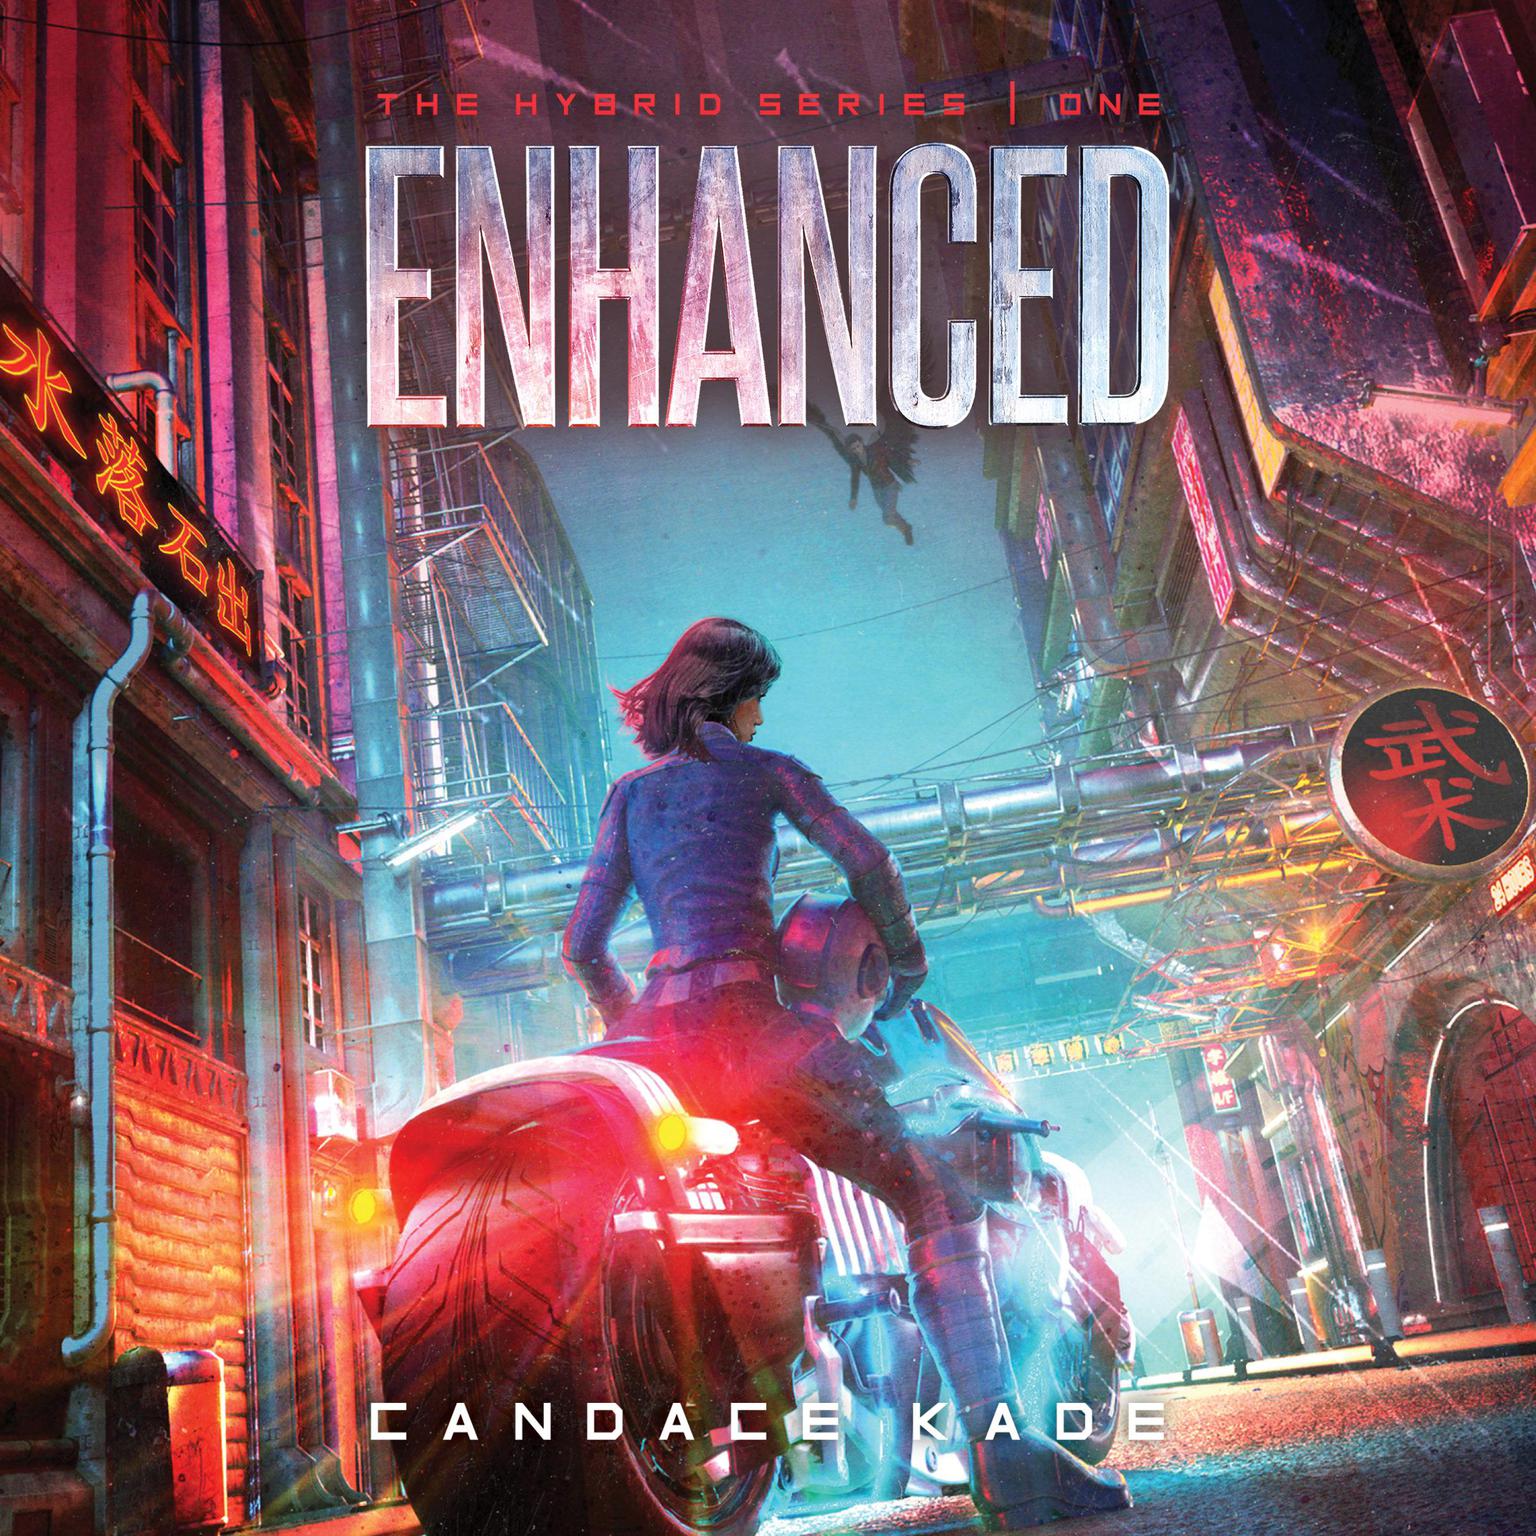 Enhanced Audiobook, by Candace Kade